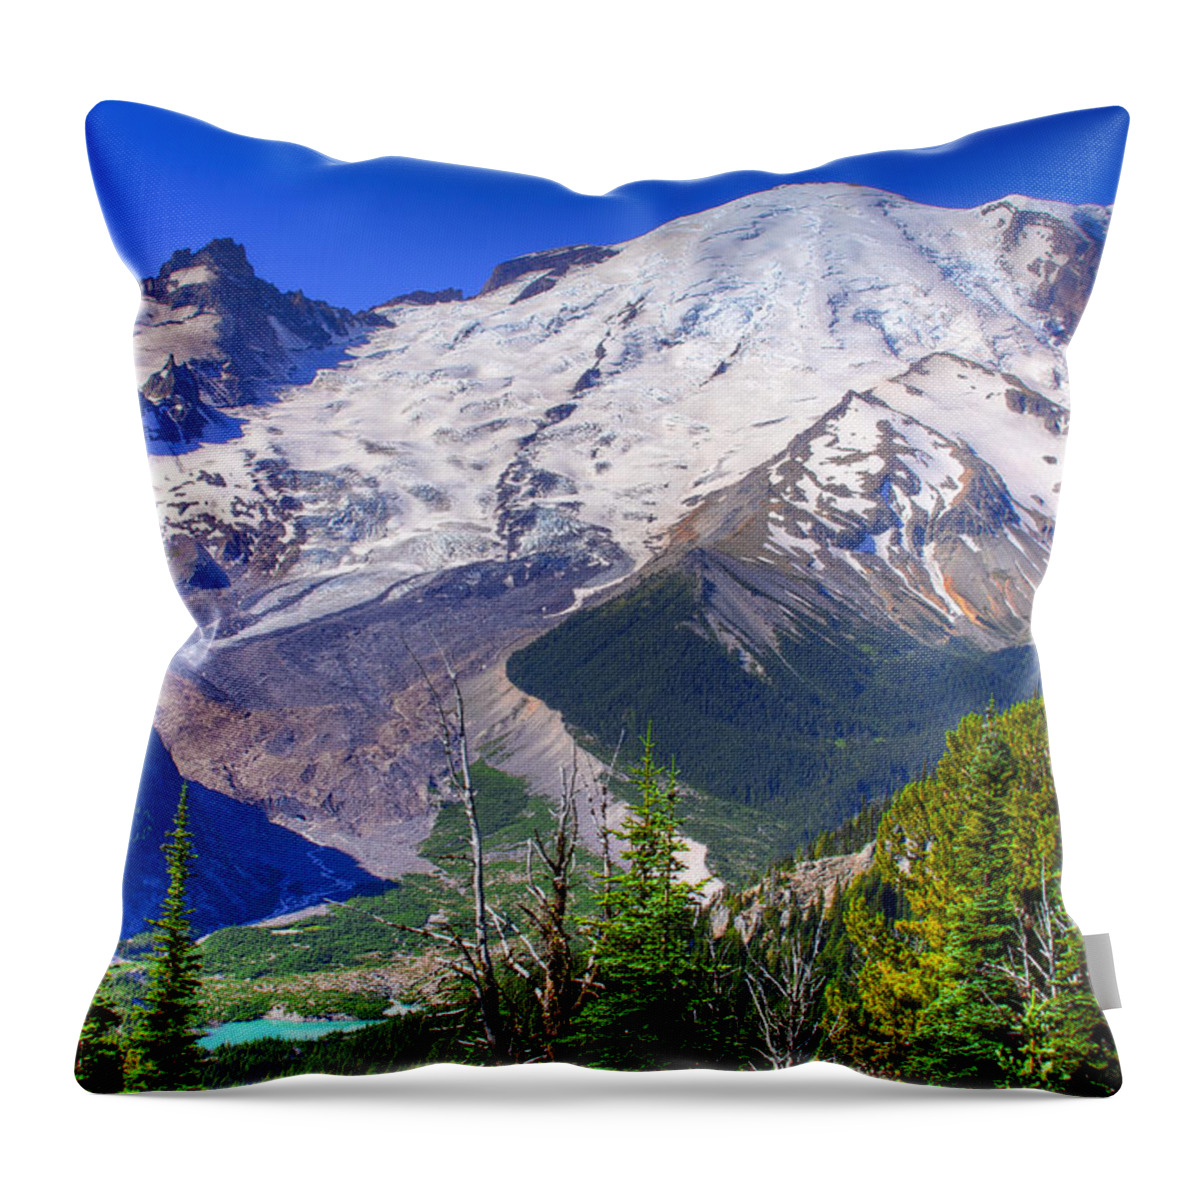 Mount Rainier Throw Pillow featuring the photograph Mount Rainier III by David Patterson